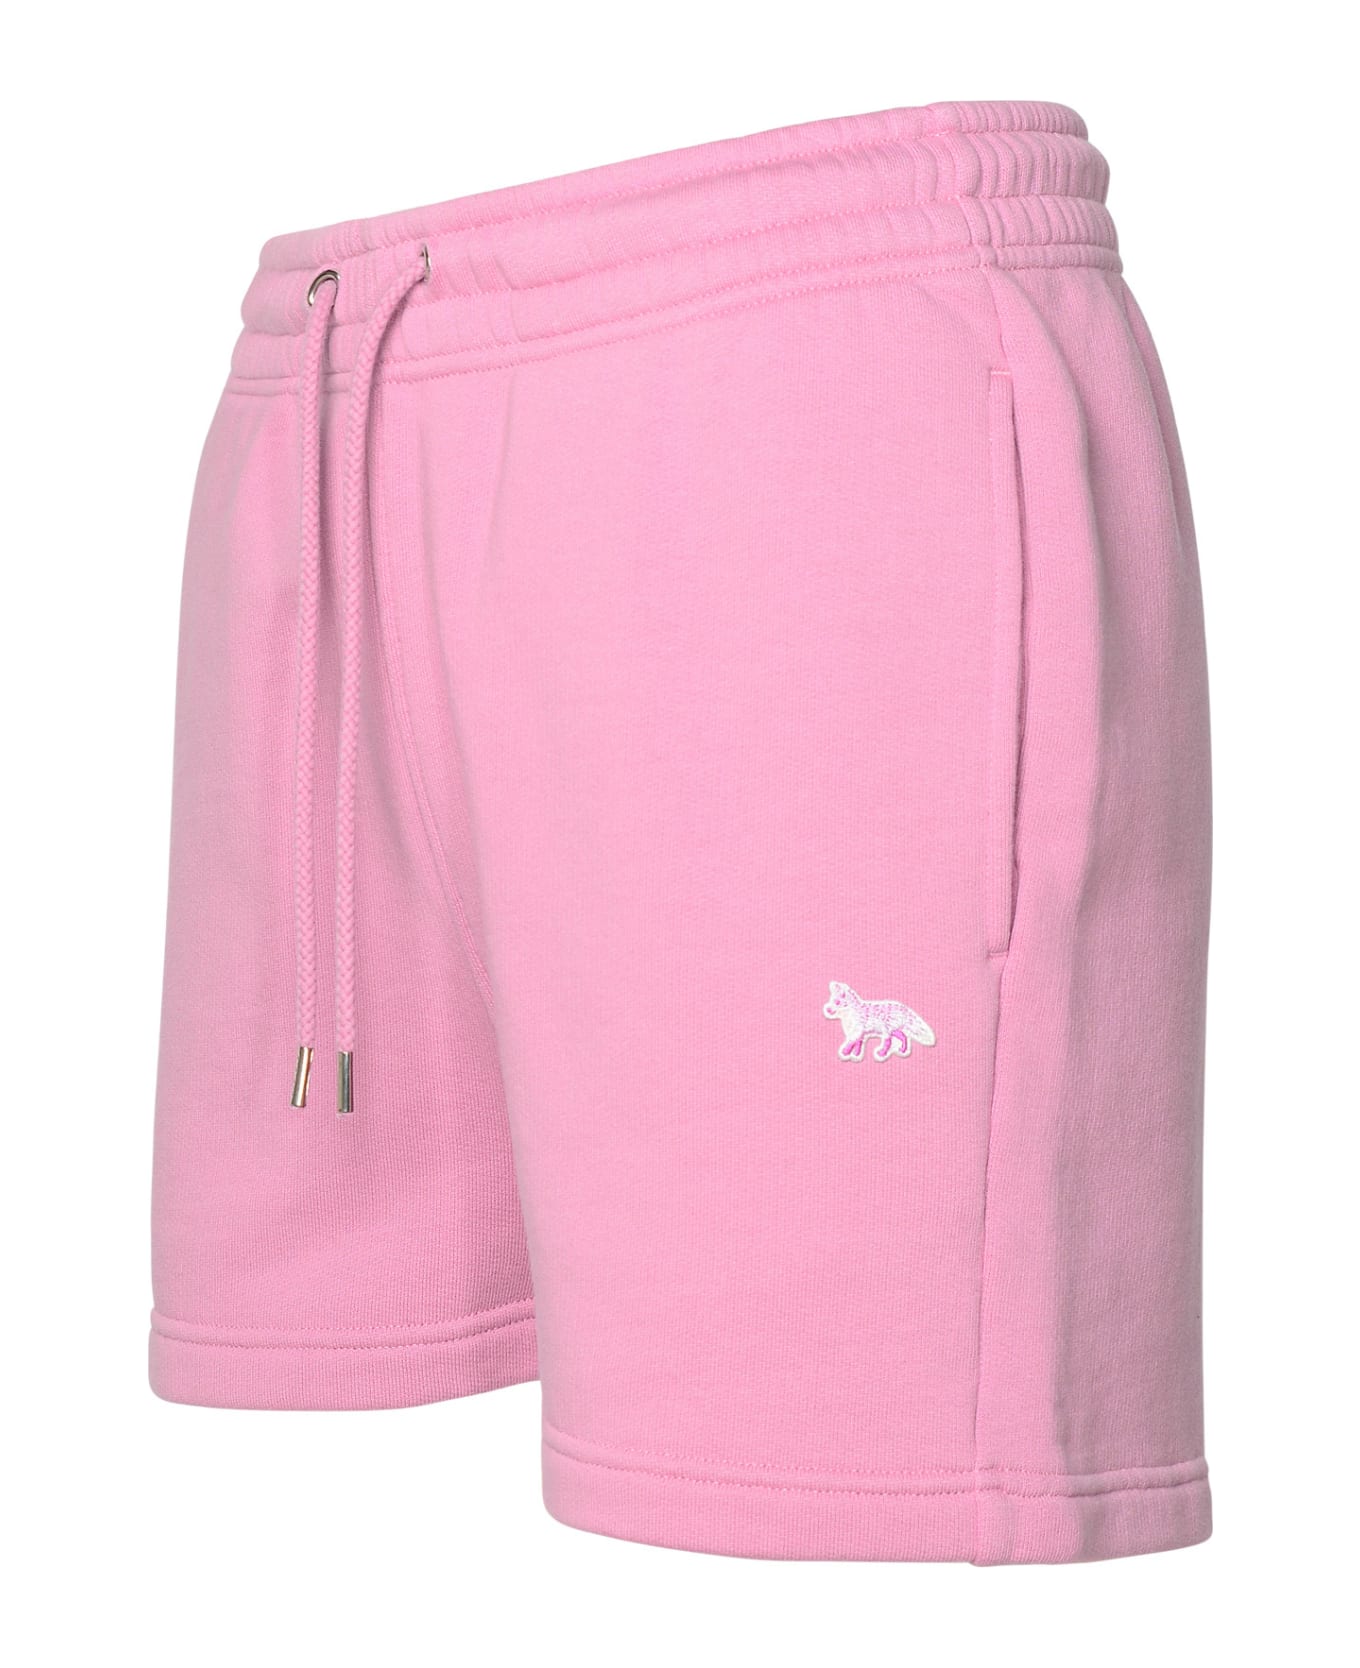 Maison Kitsuné Pink Cotton Shorts - PINK ショートパンツ